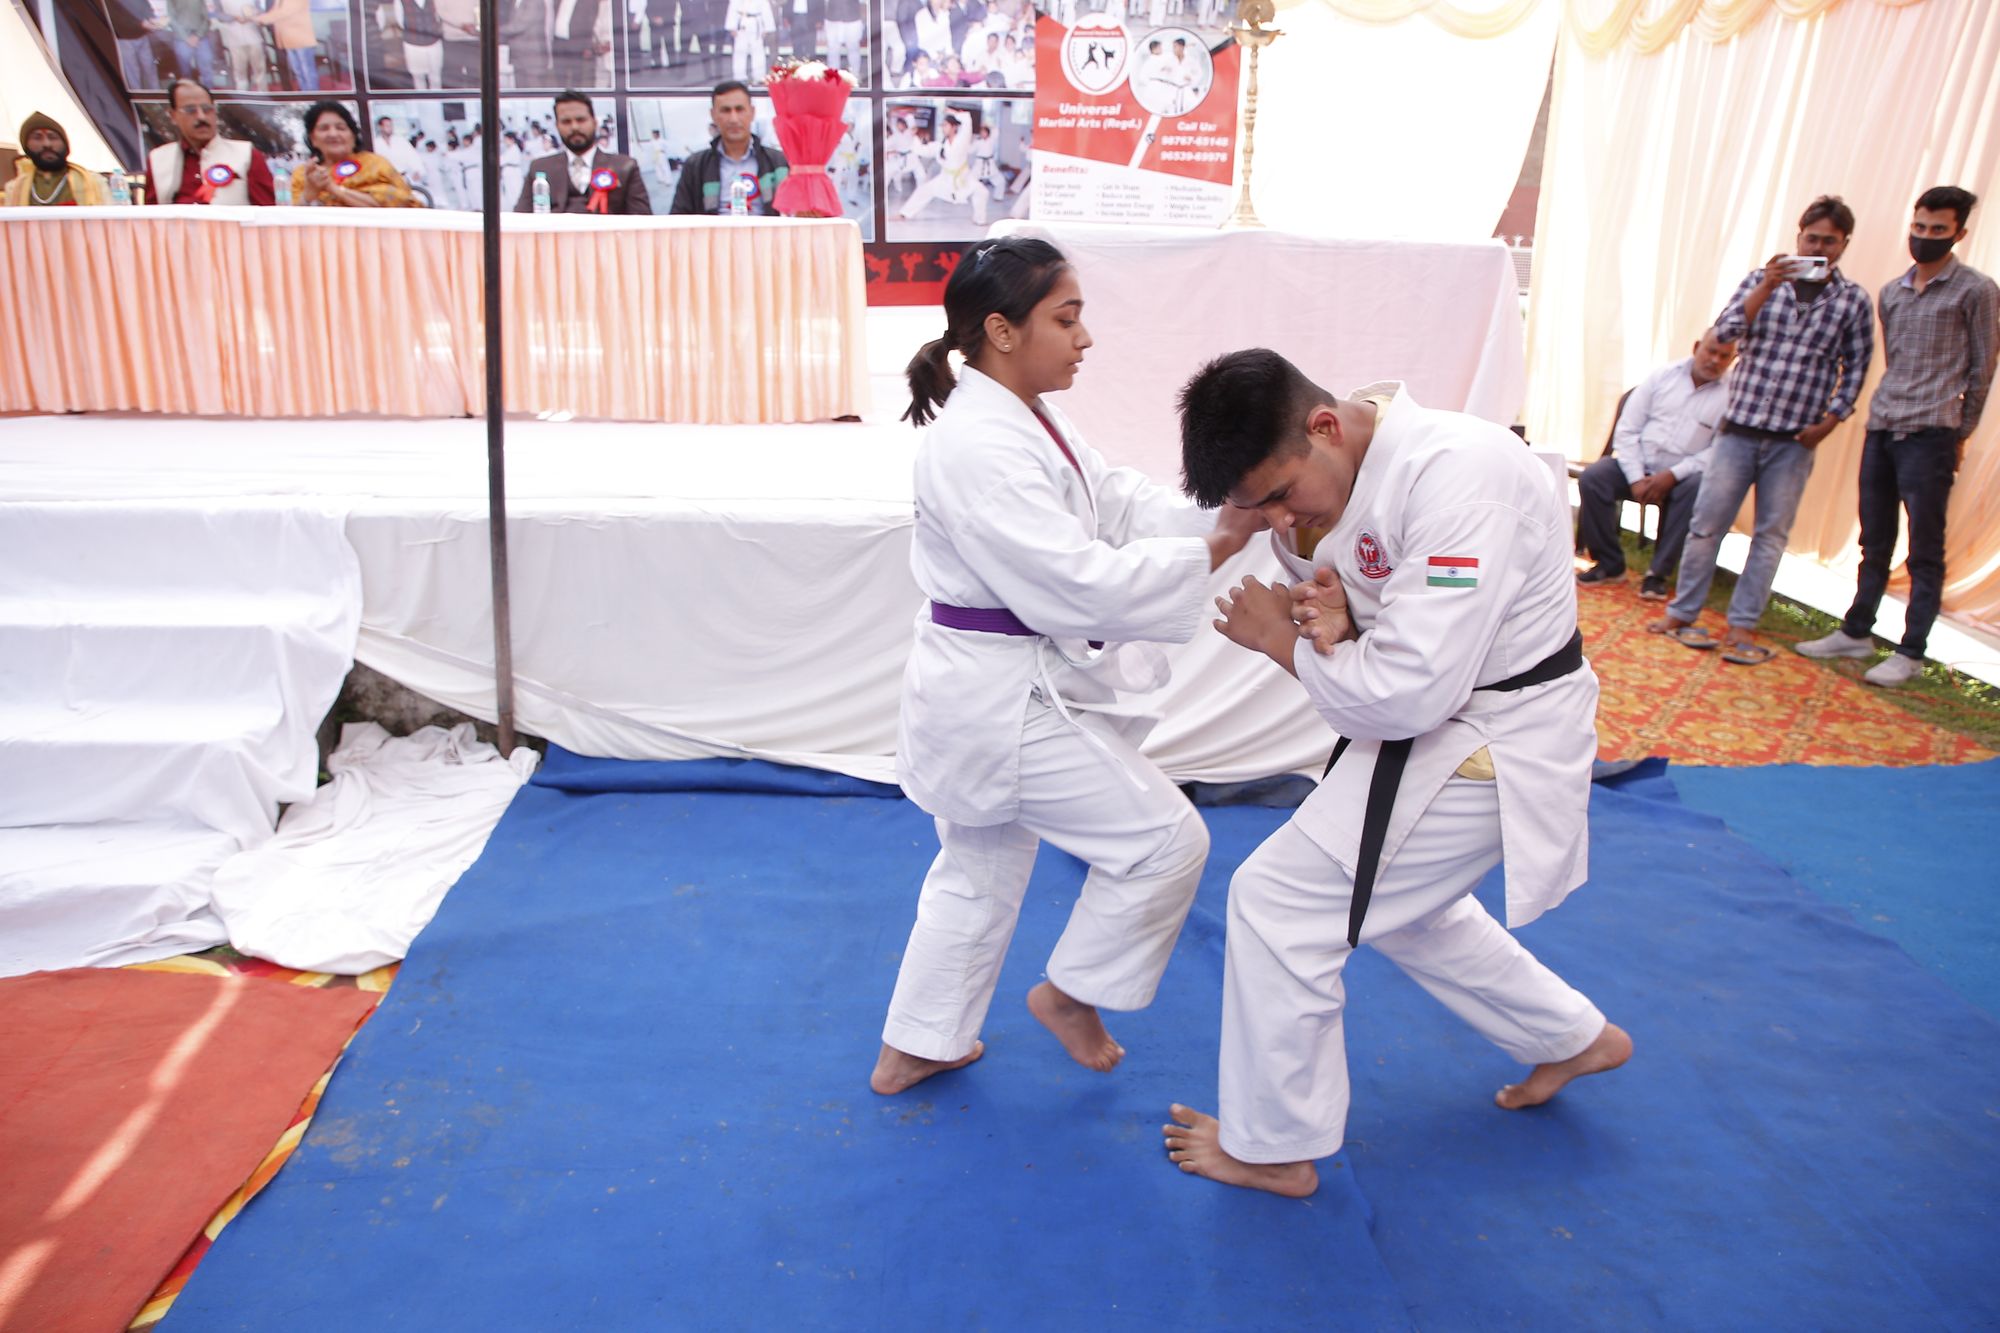 Shotokan Karate Belt Grading Test and Camp at Gyandeep School Sector 20-C, Chandigarh 13-03-2022.